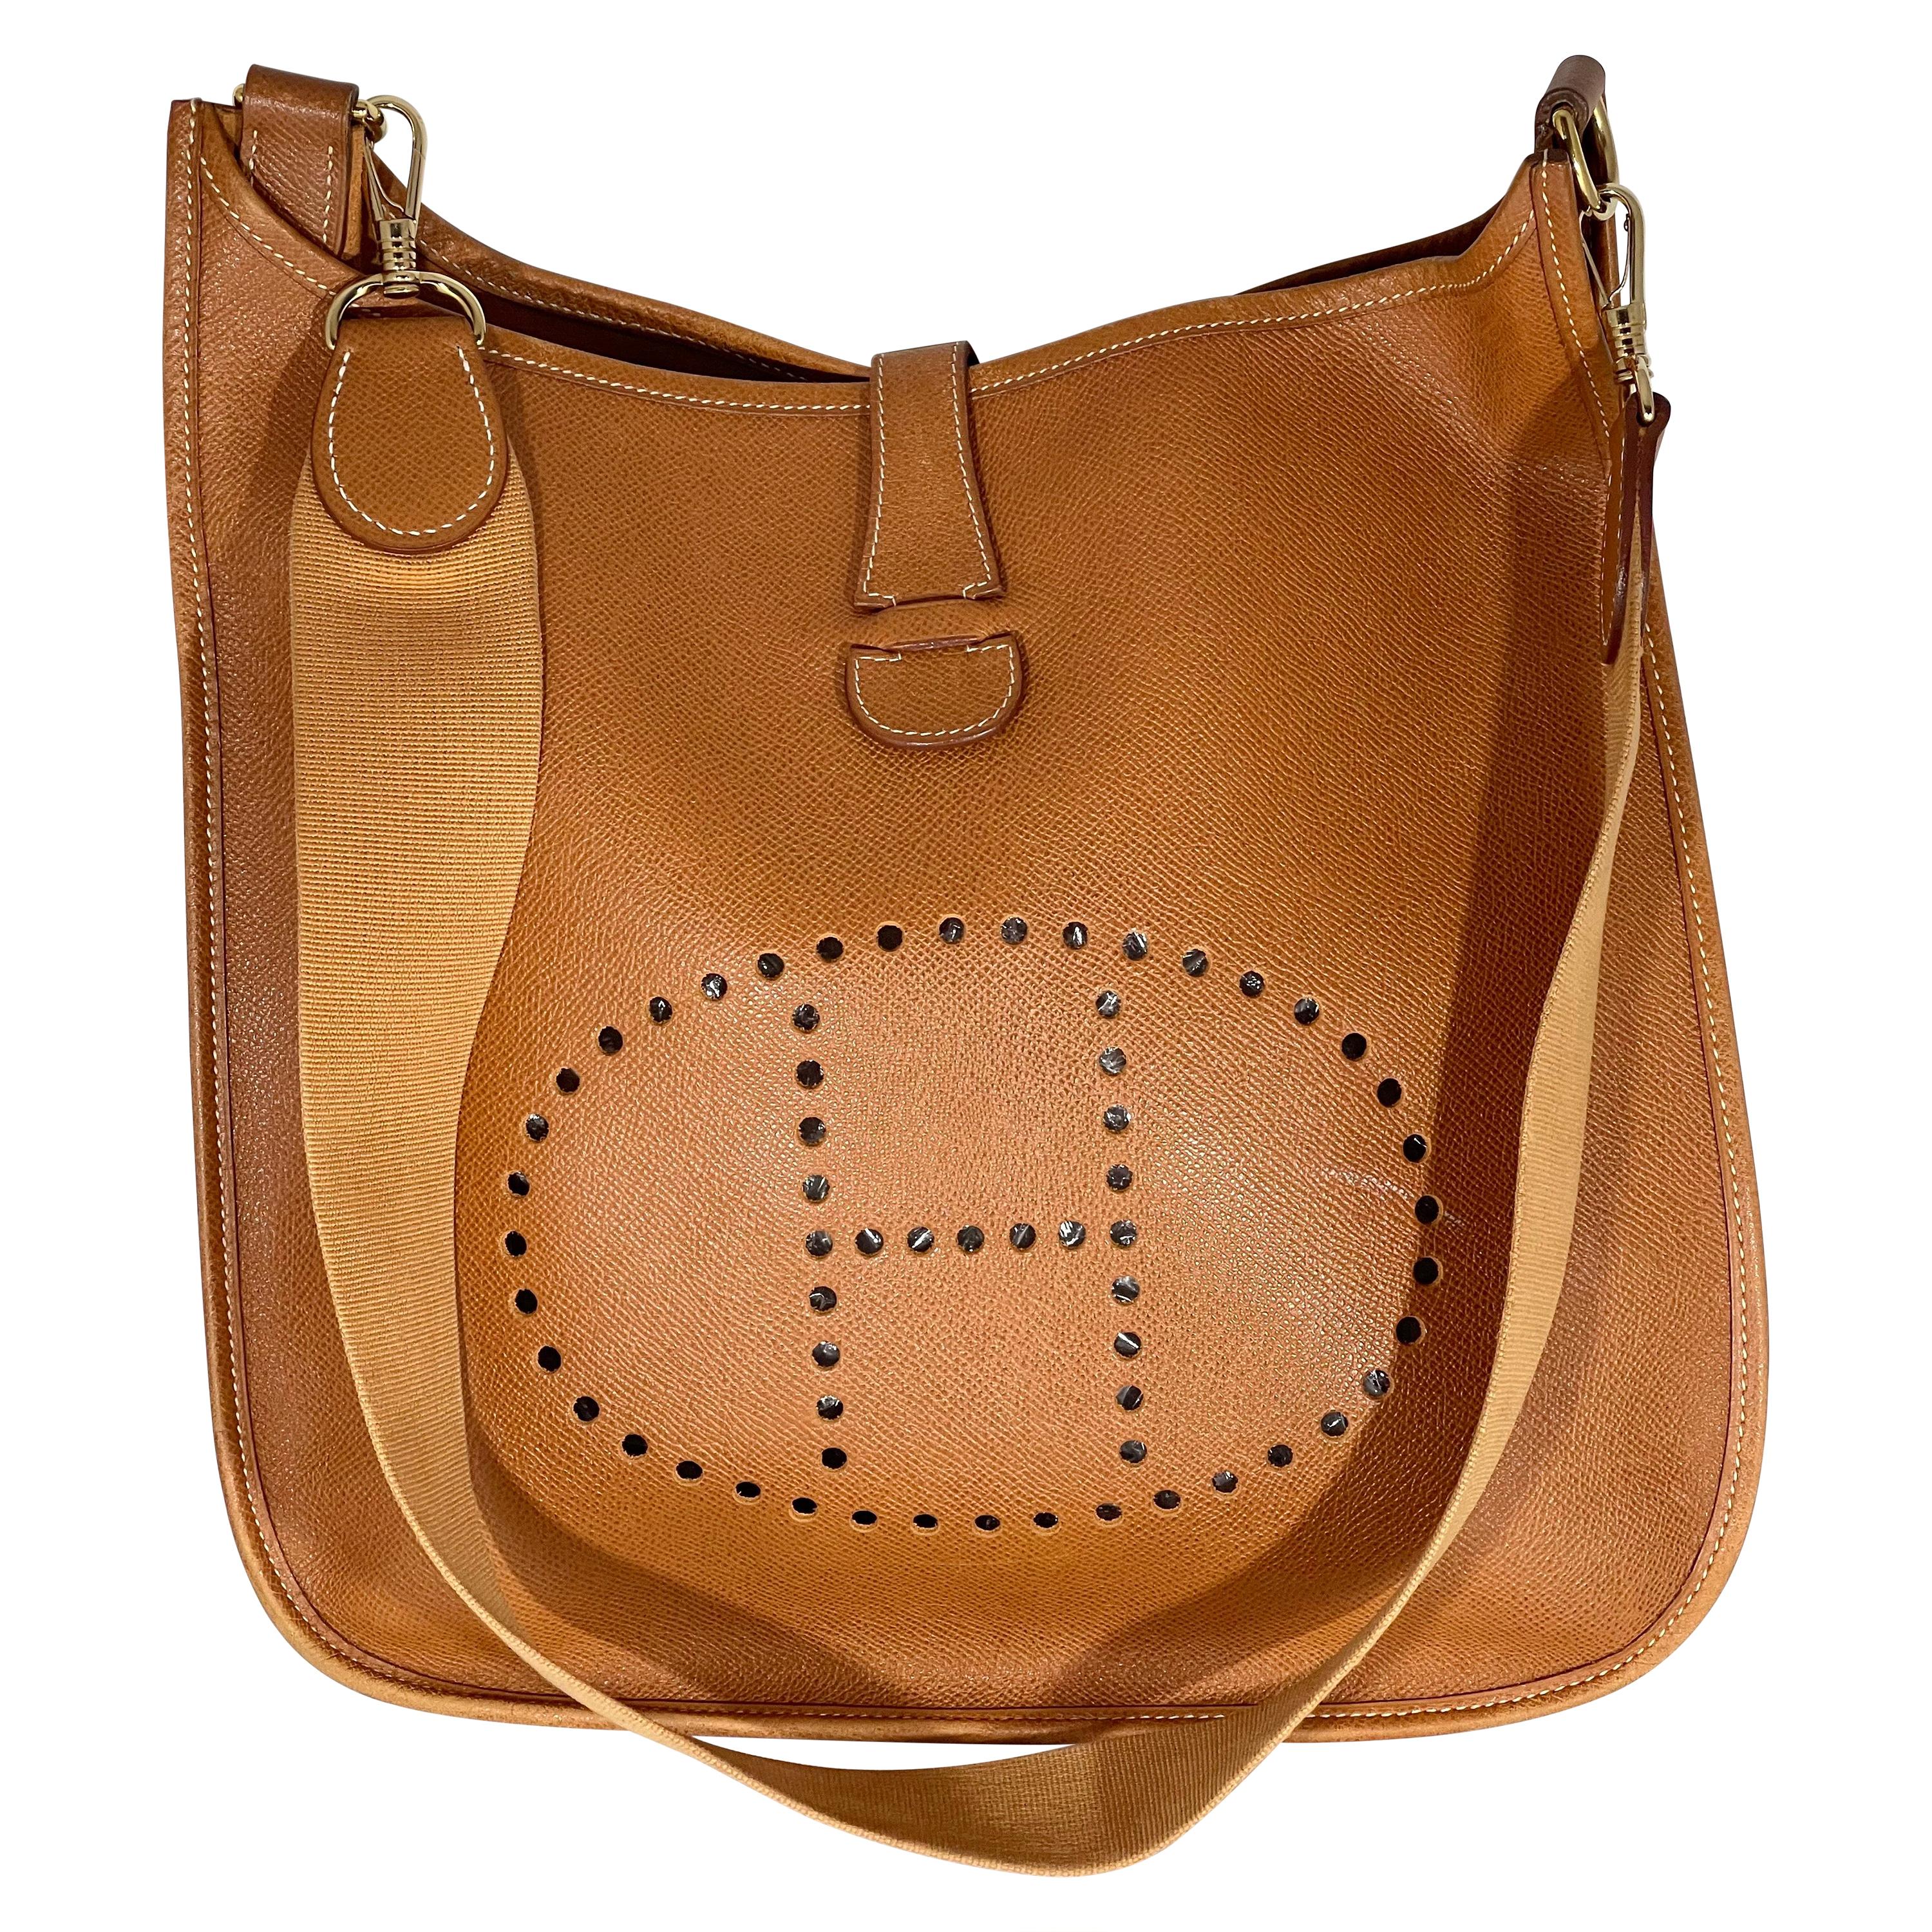 Hermès Evelyne Pm Brown Leather Cross Body Bag